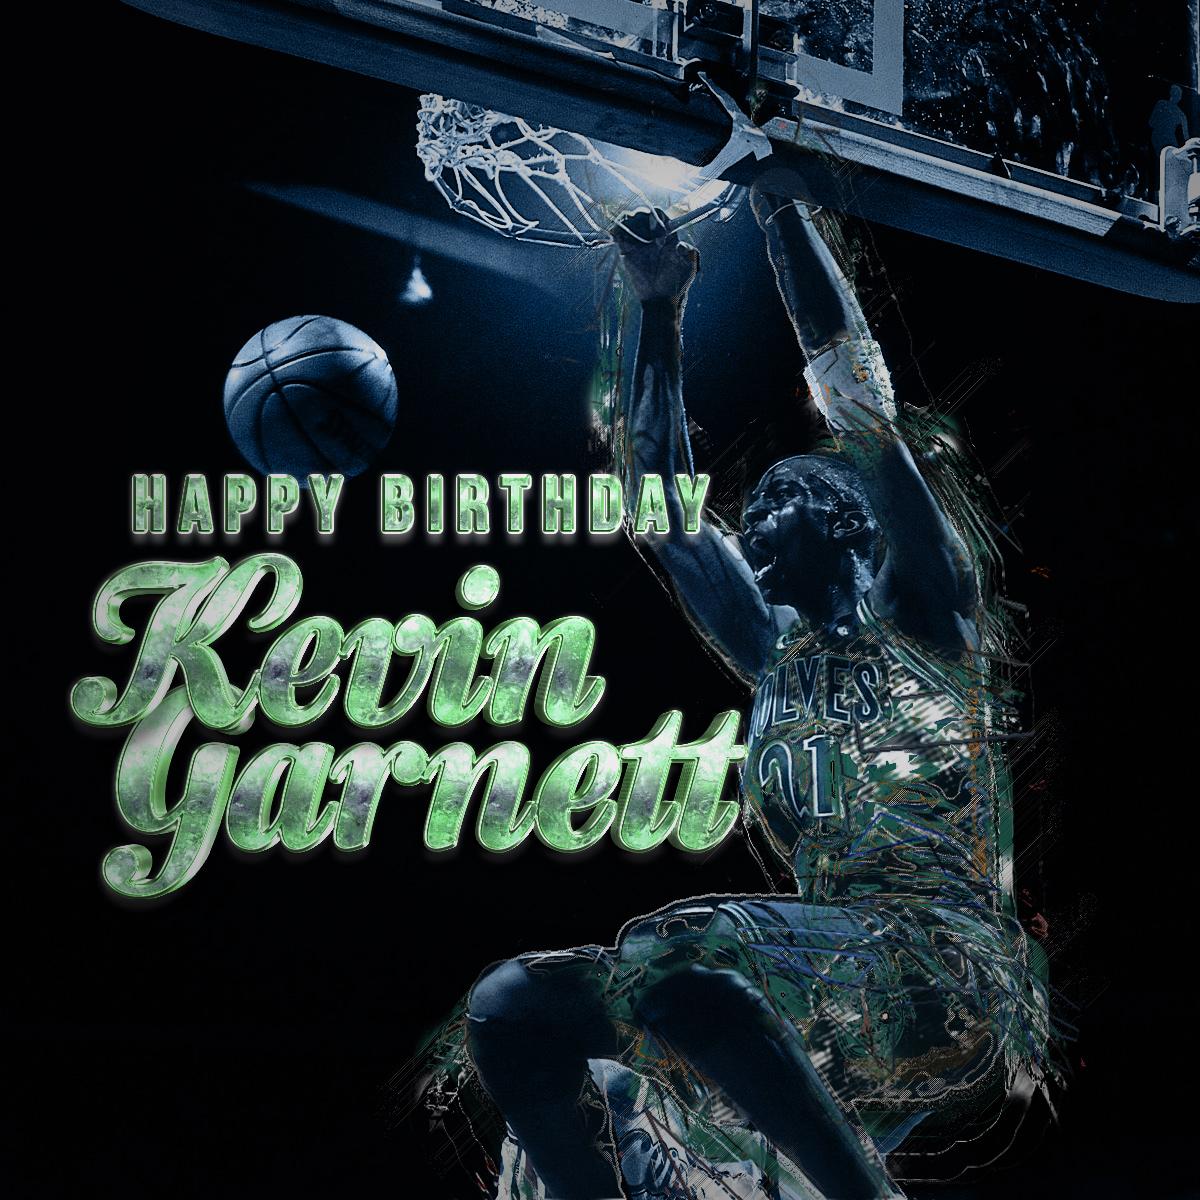 Happy Birthday to 15-time All-Star Kevin Garnett!  